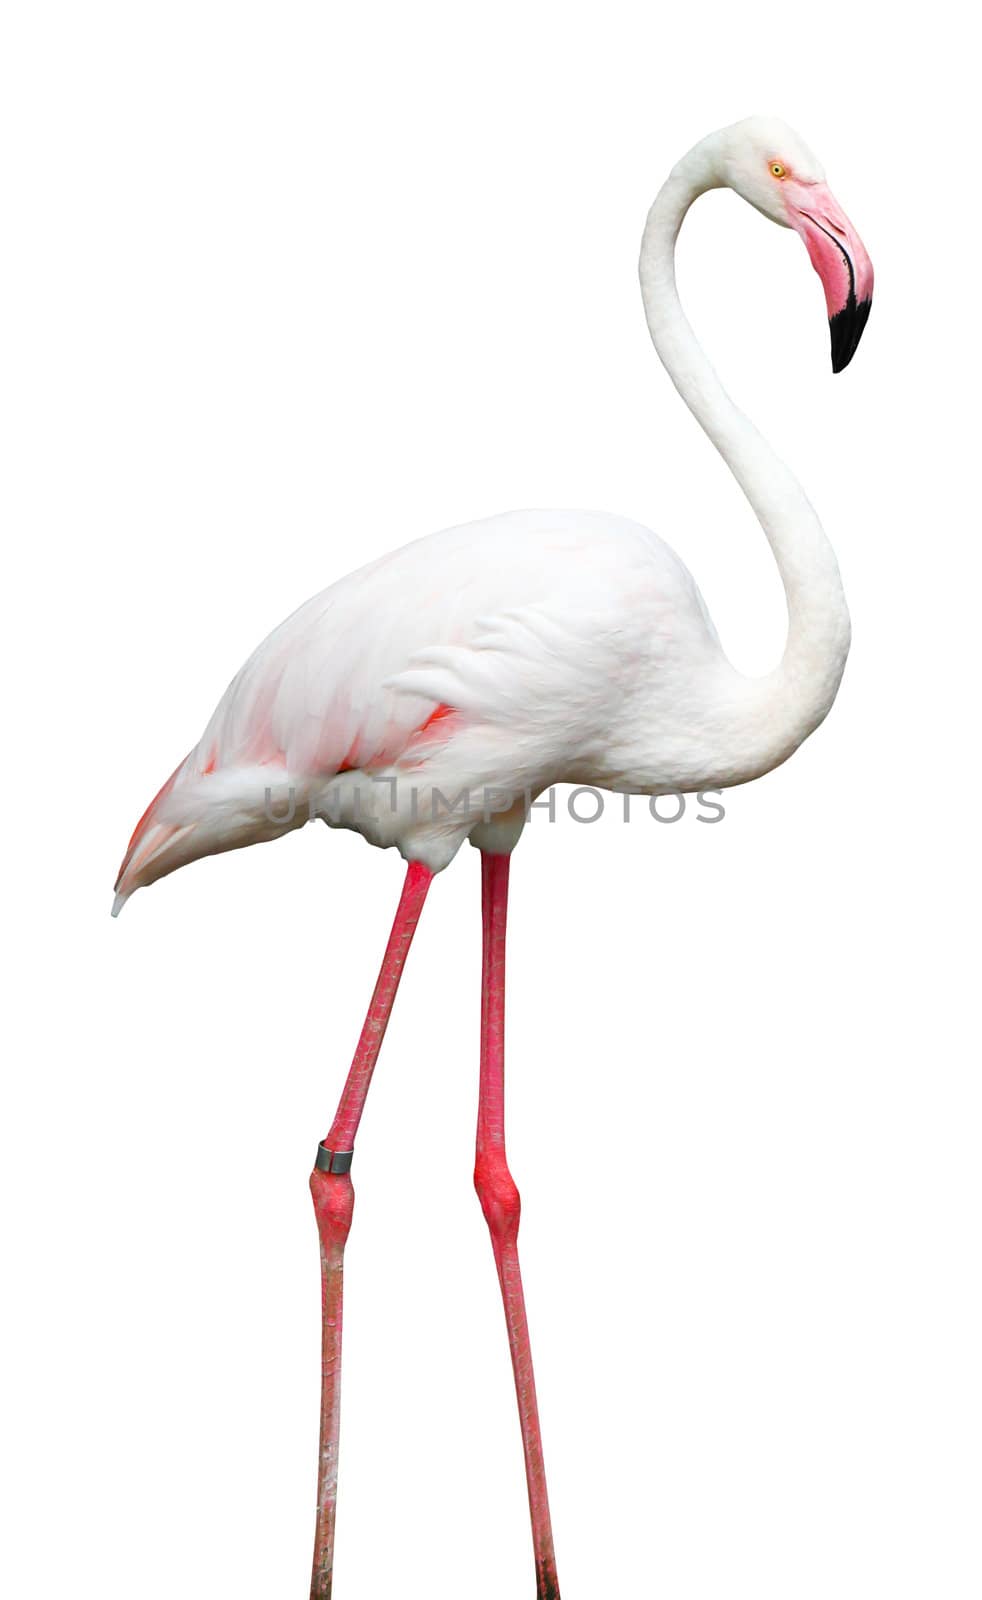 Bird flamingo walking on a white background by bajita111122